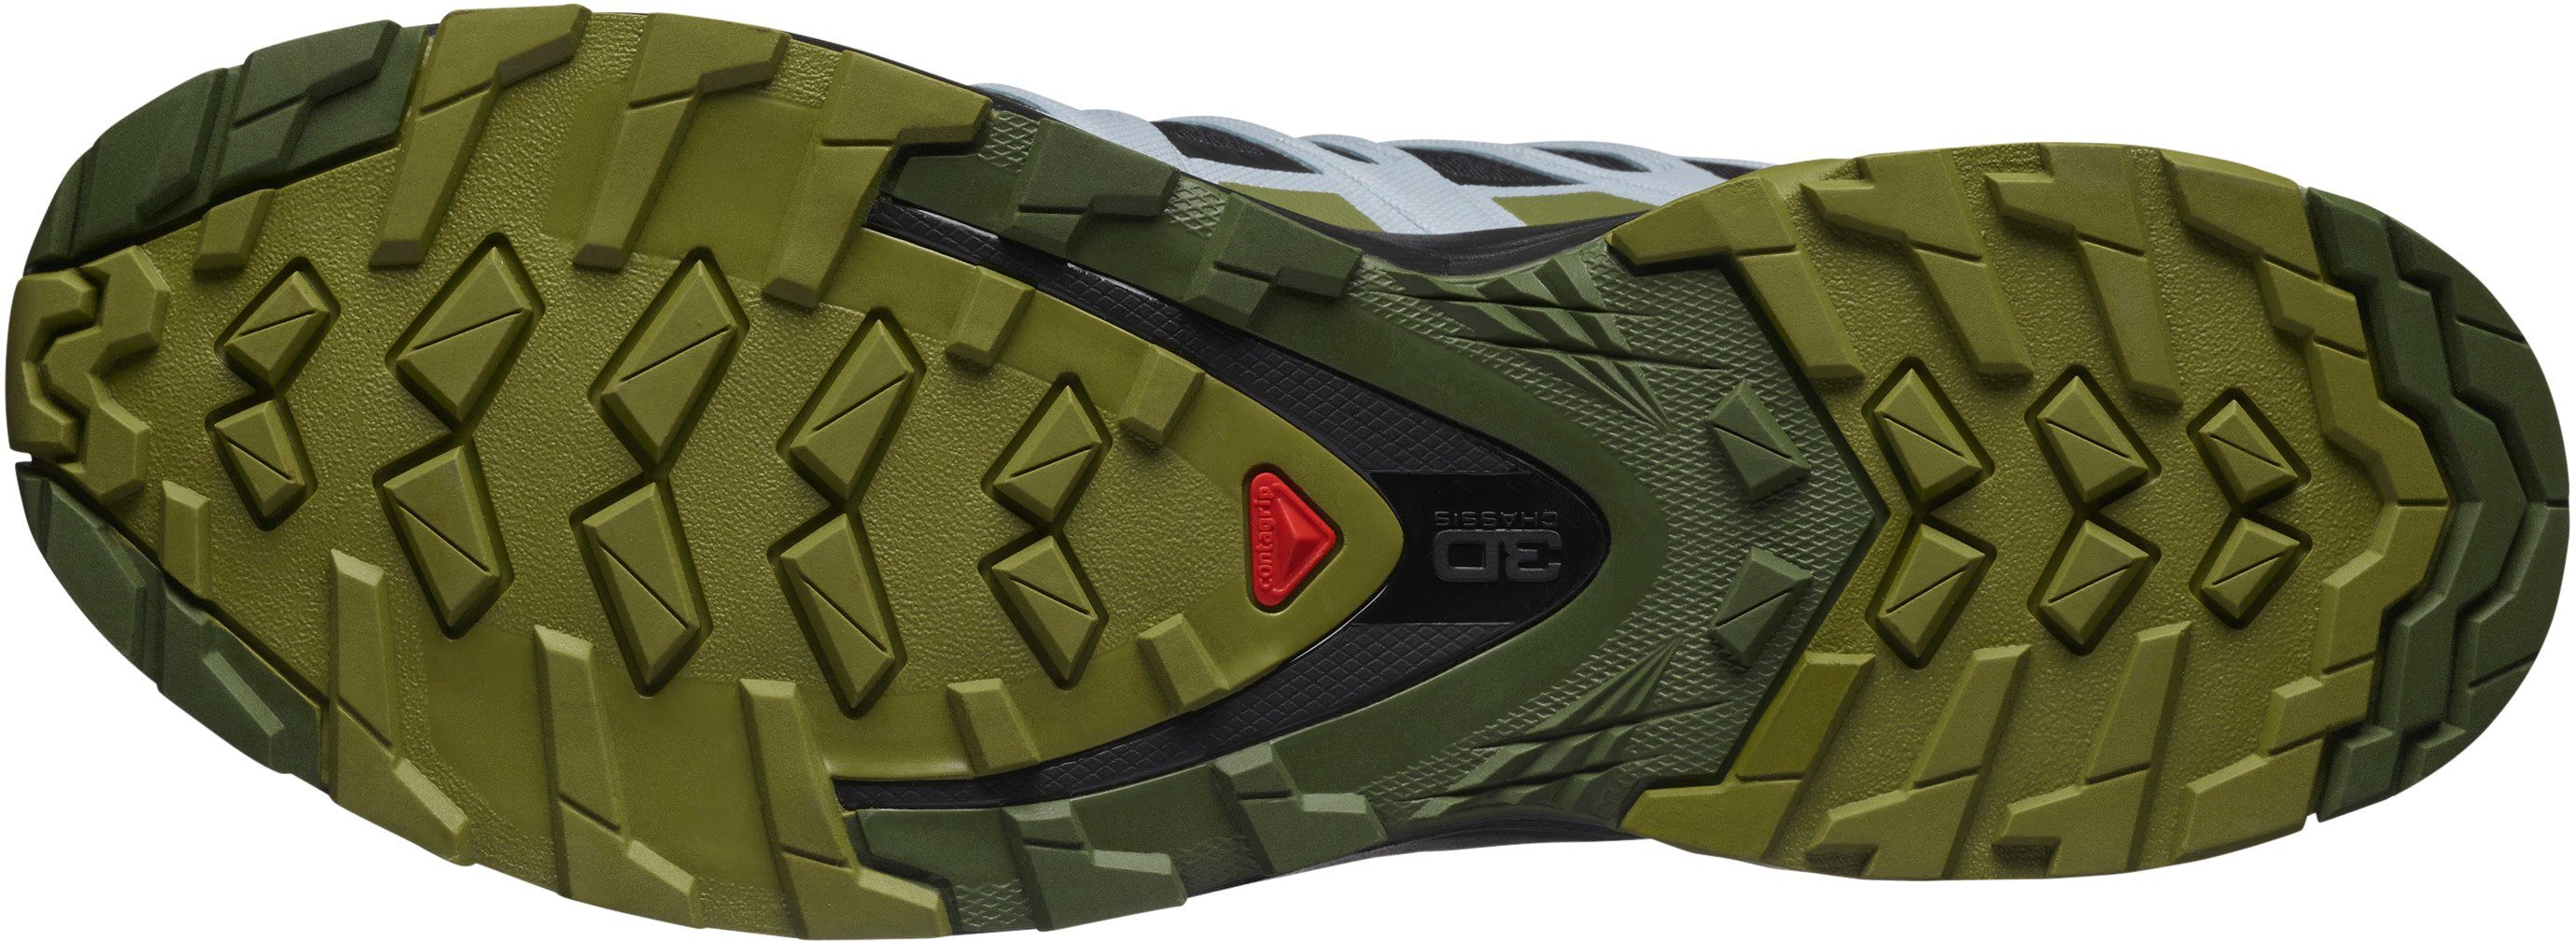 GORE-TEX® W wasserdicht schwarz-grün Trailrunningschuh XA 3D v8 Salomon PRO